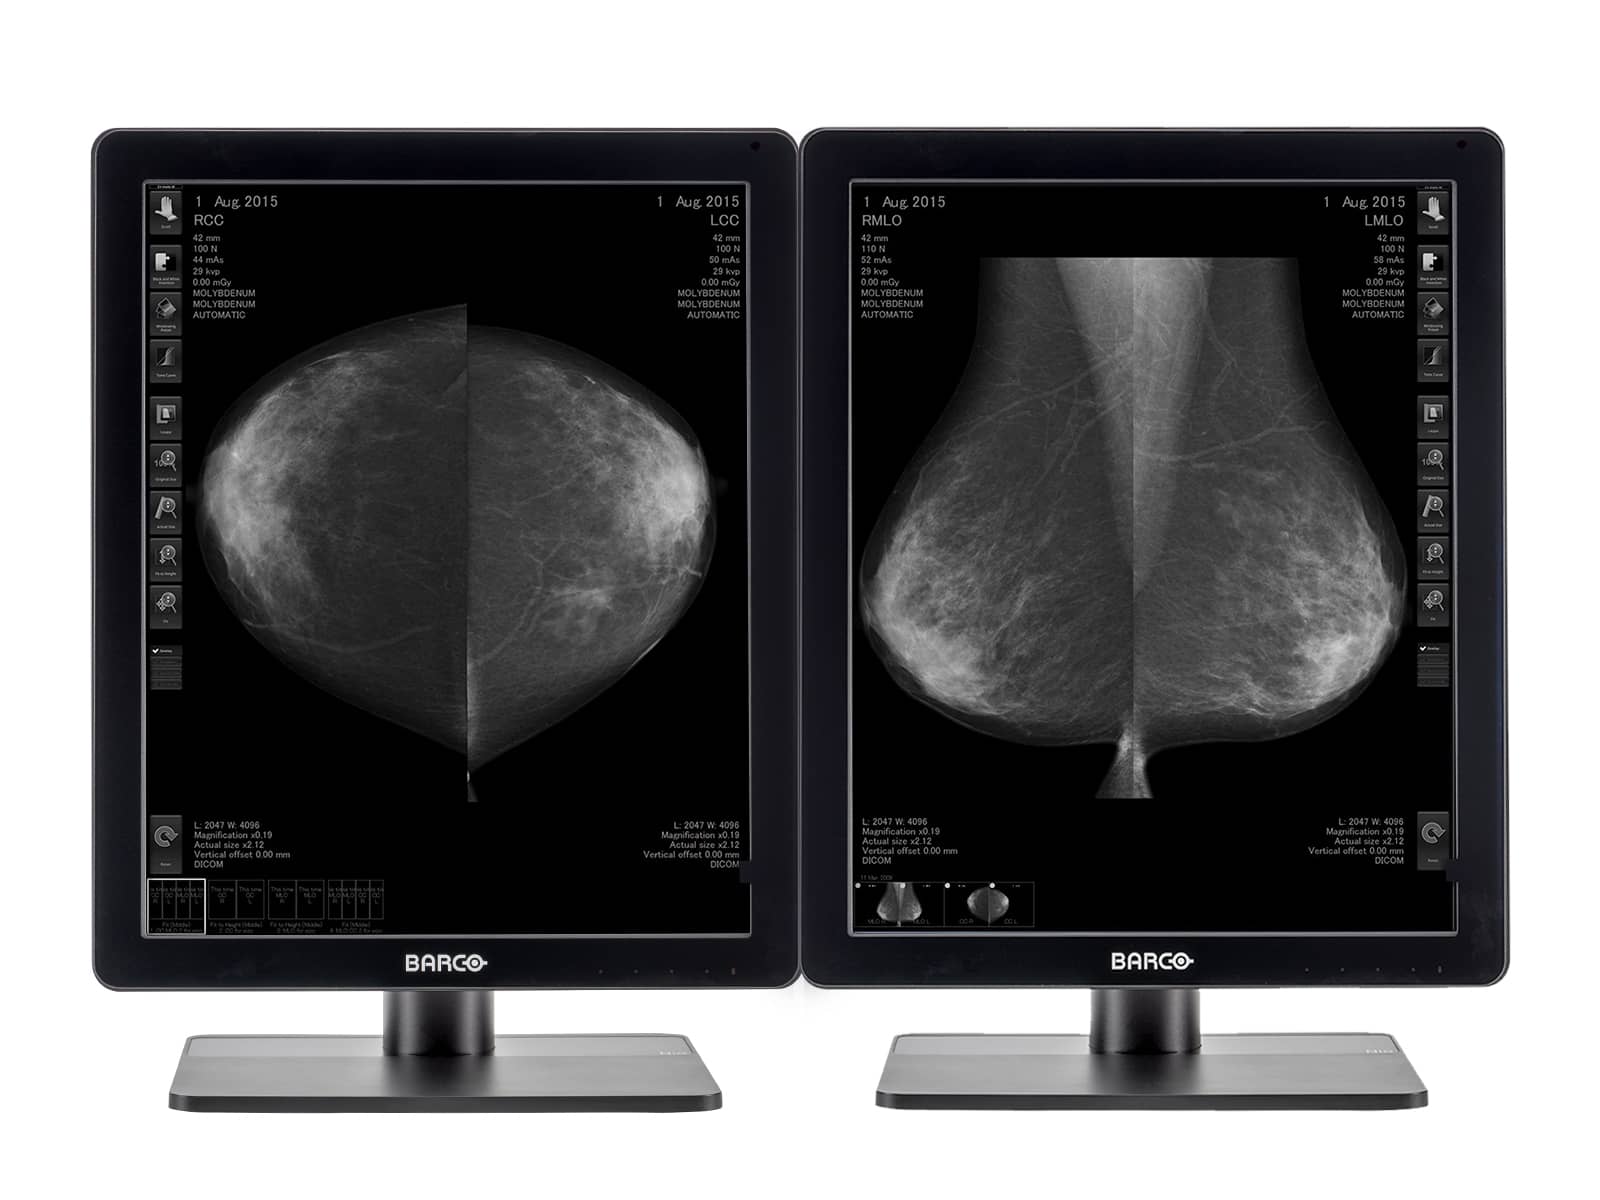 Barco Nio MDNG-5221 Grayscale 3D-DBT Mammo Breast Imaging PACS Display (K9300350B) Monitors.com 